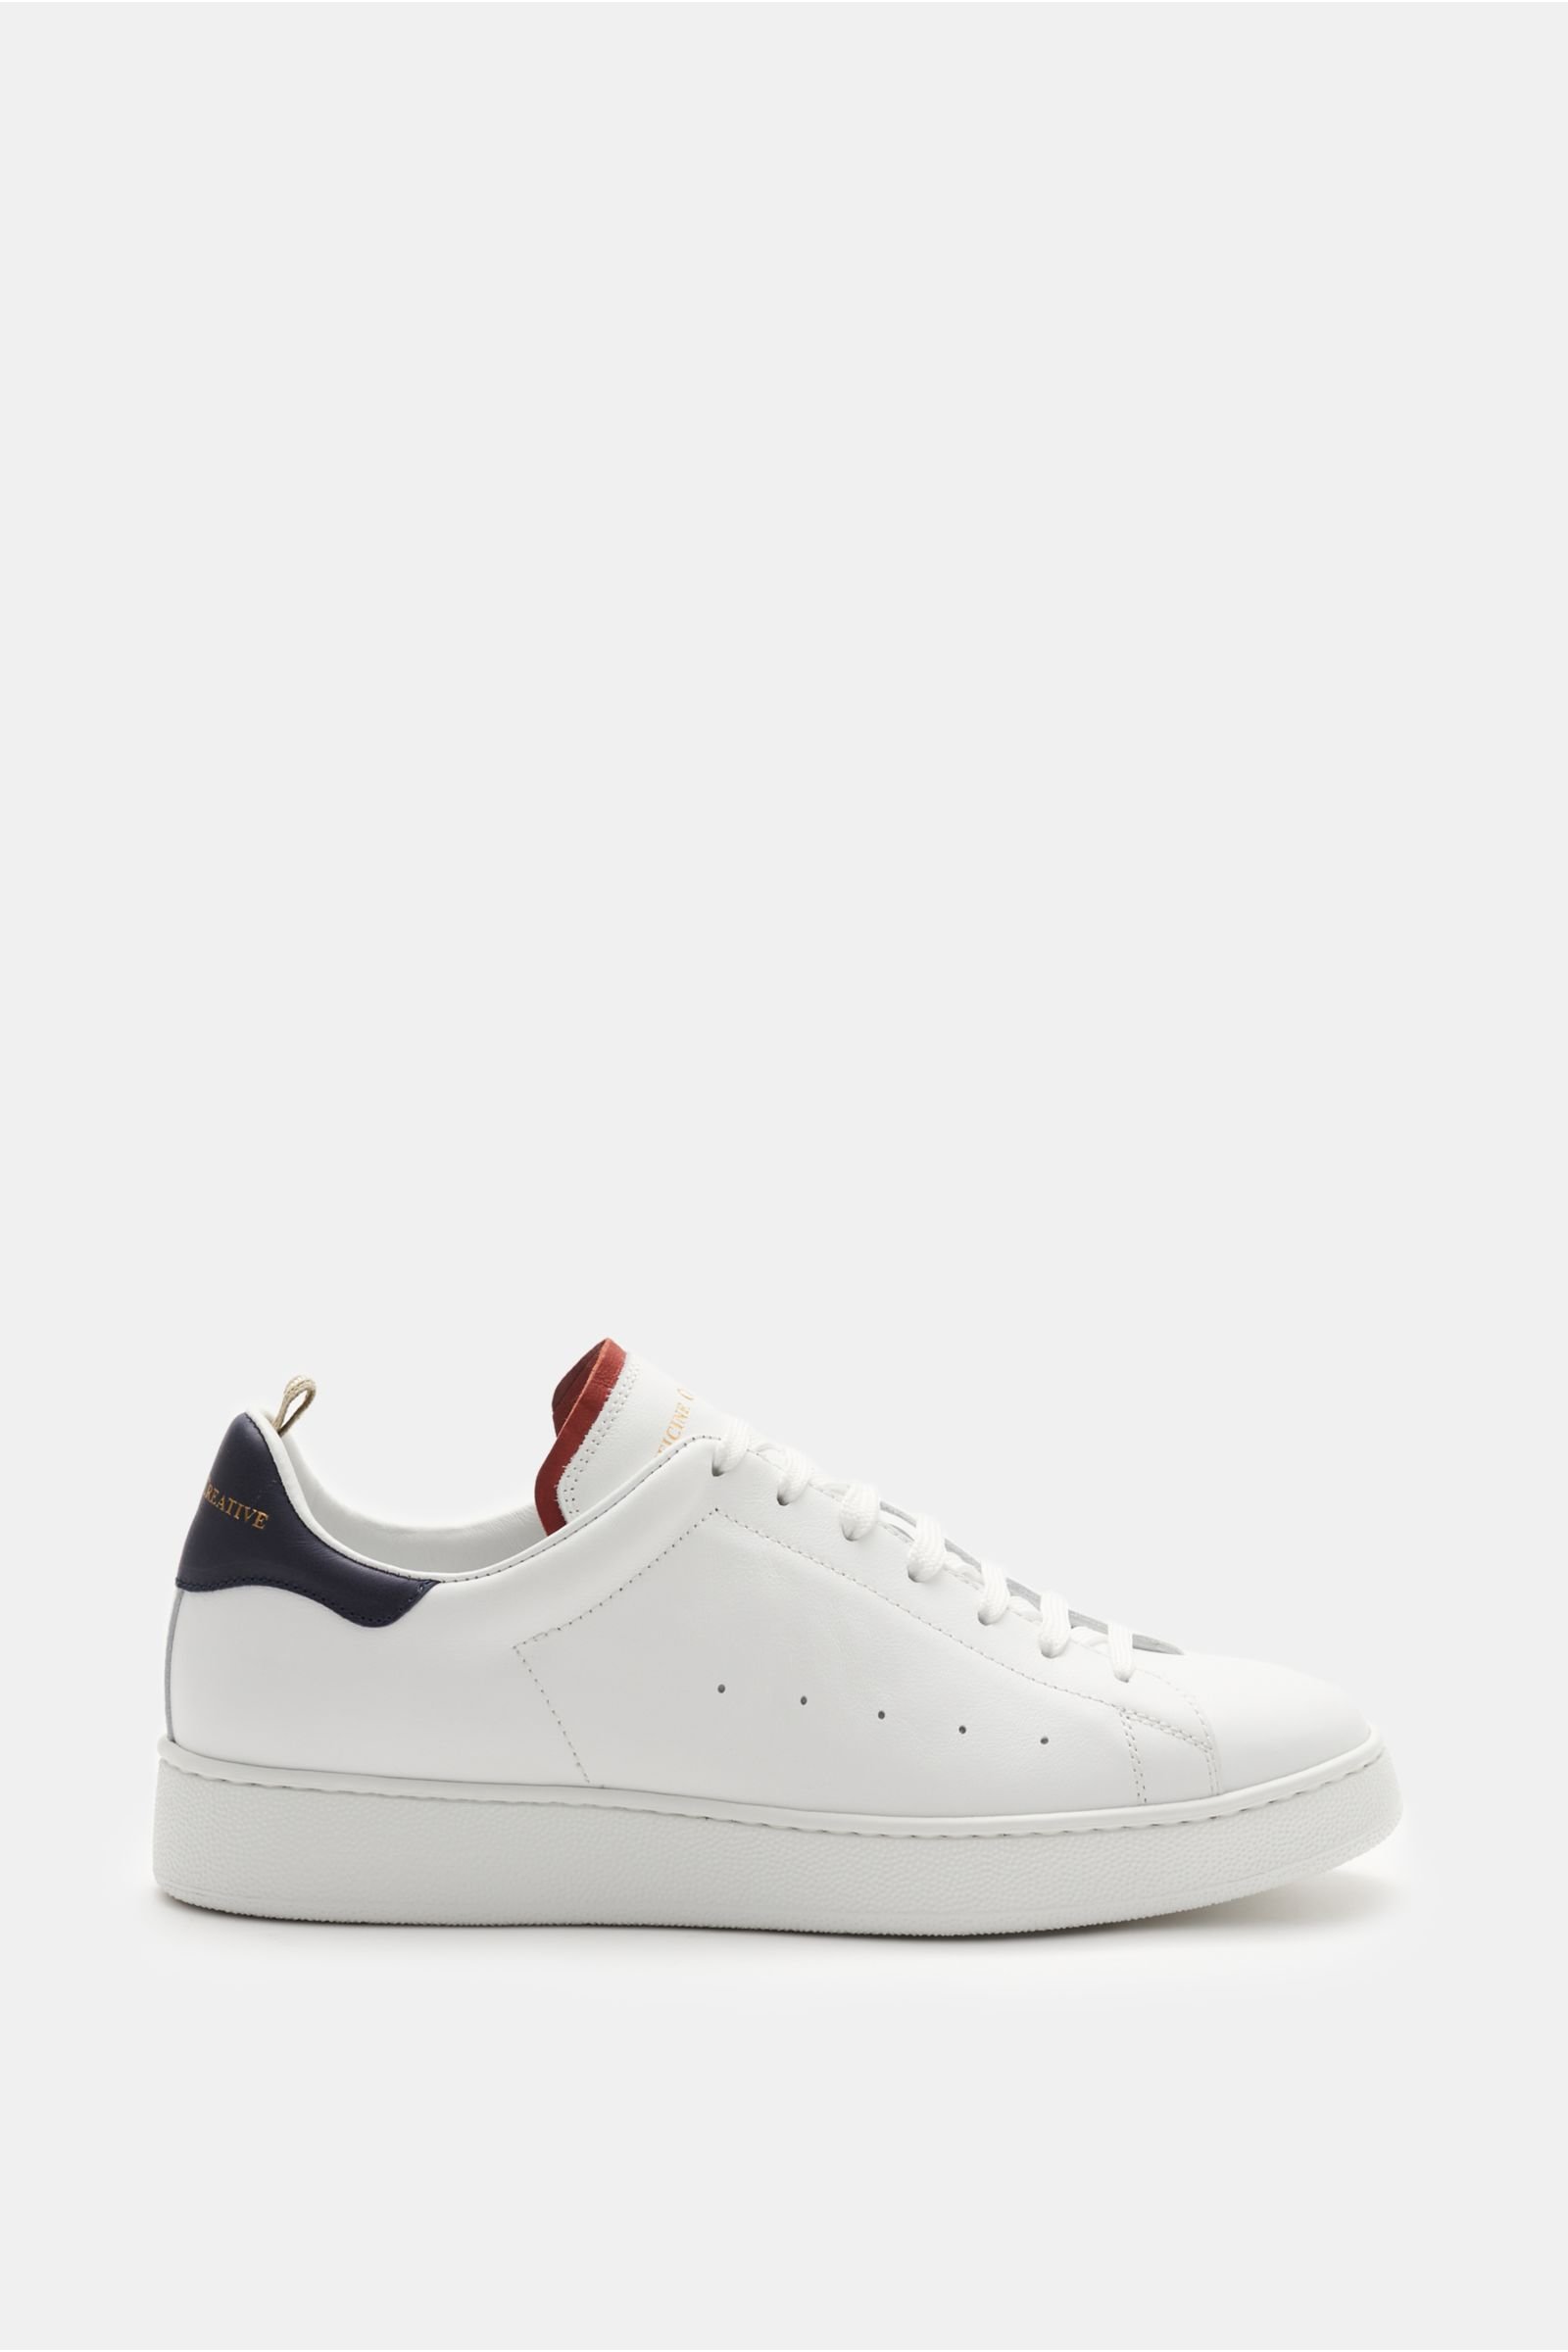 Sneakers 'Mower 005' white/navy/rust red